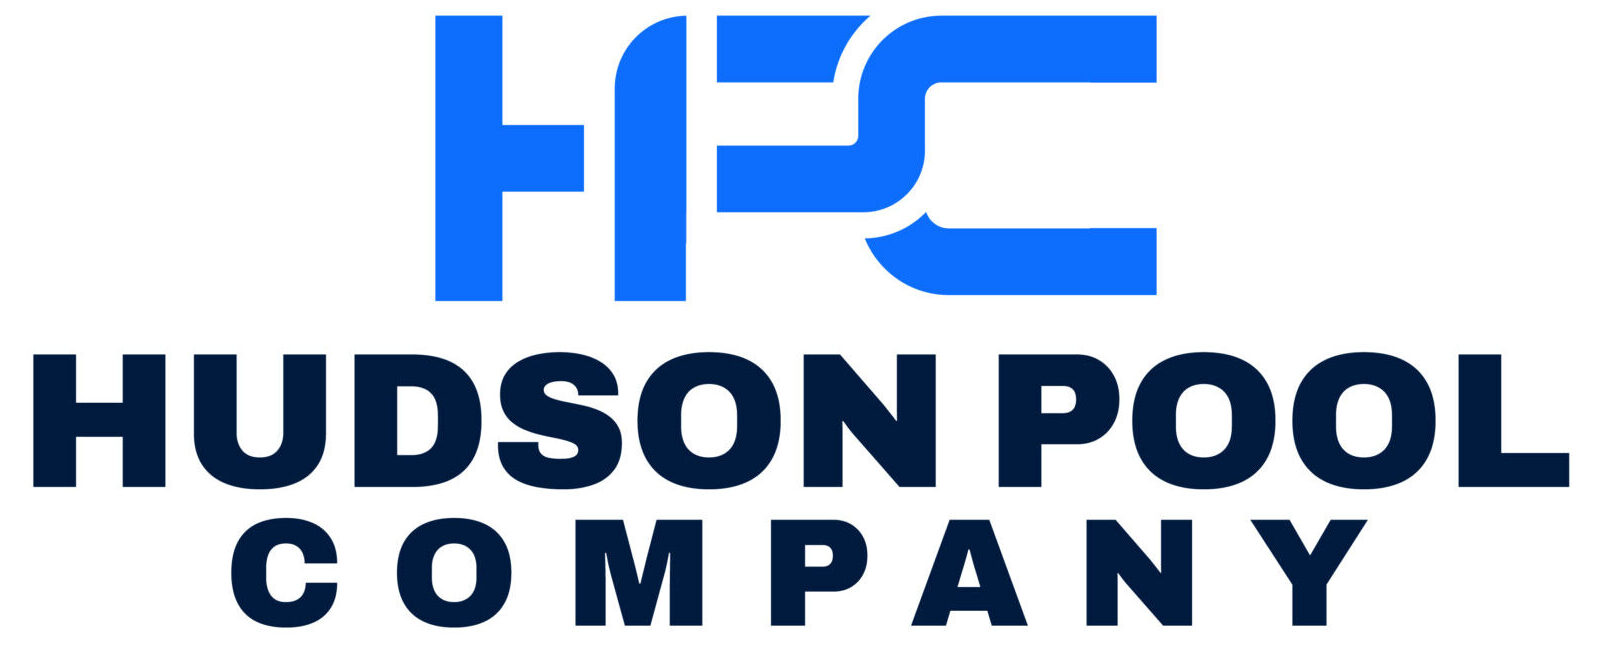 Hudson Pool Company